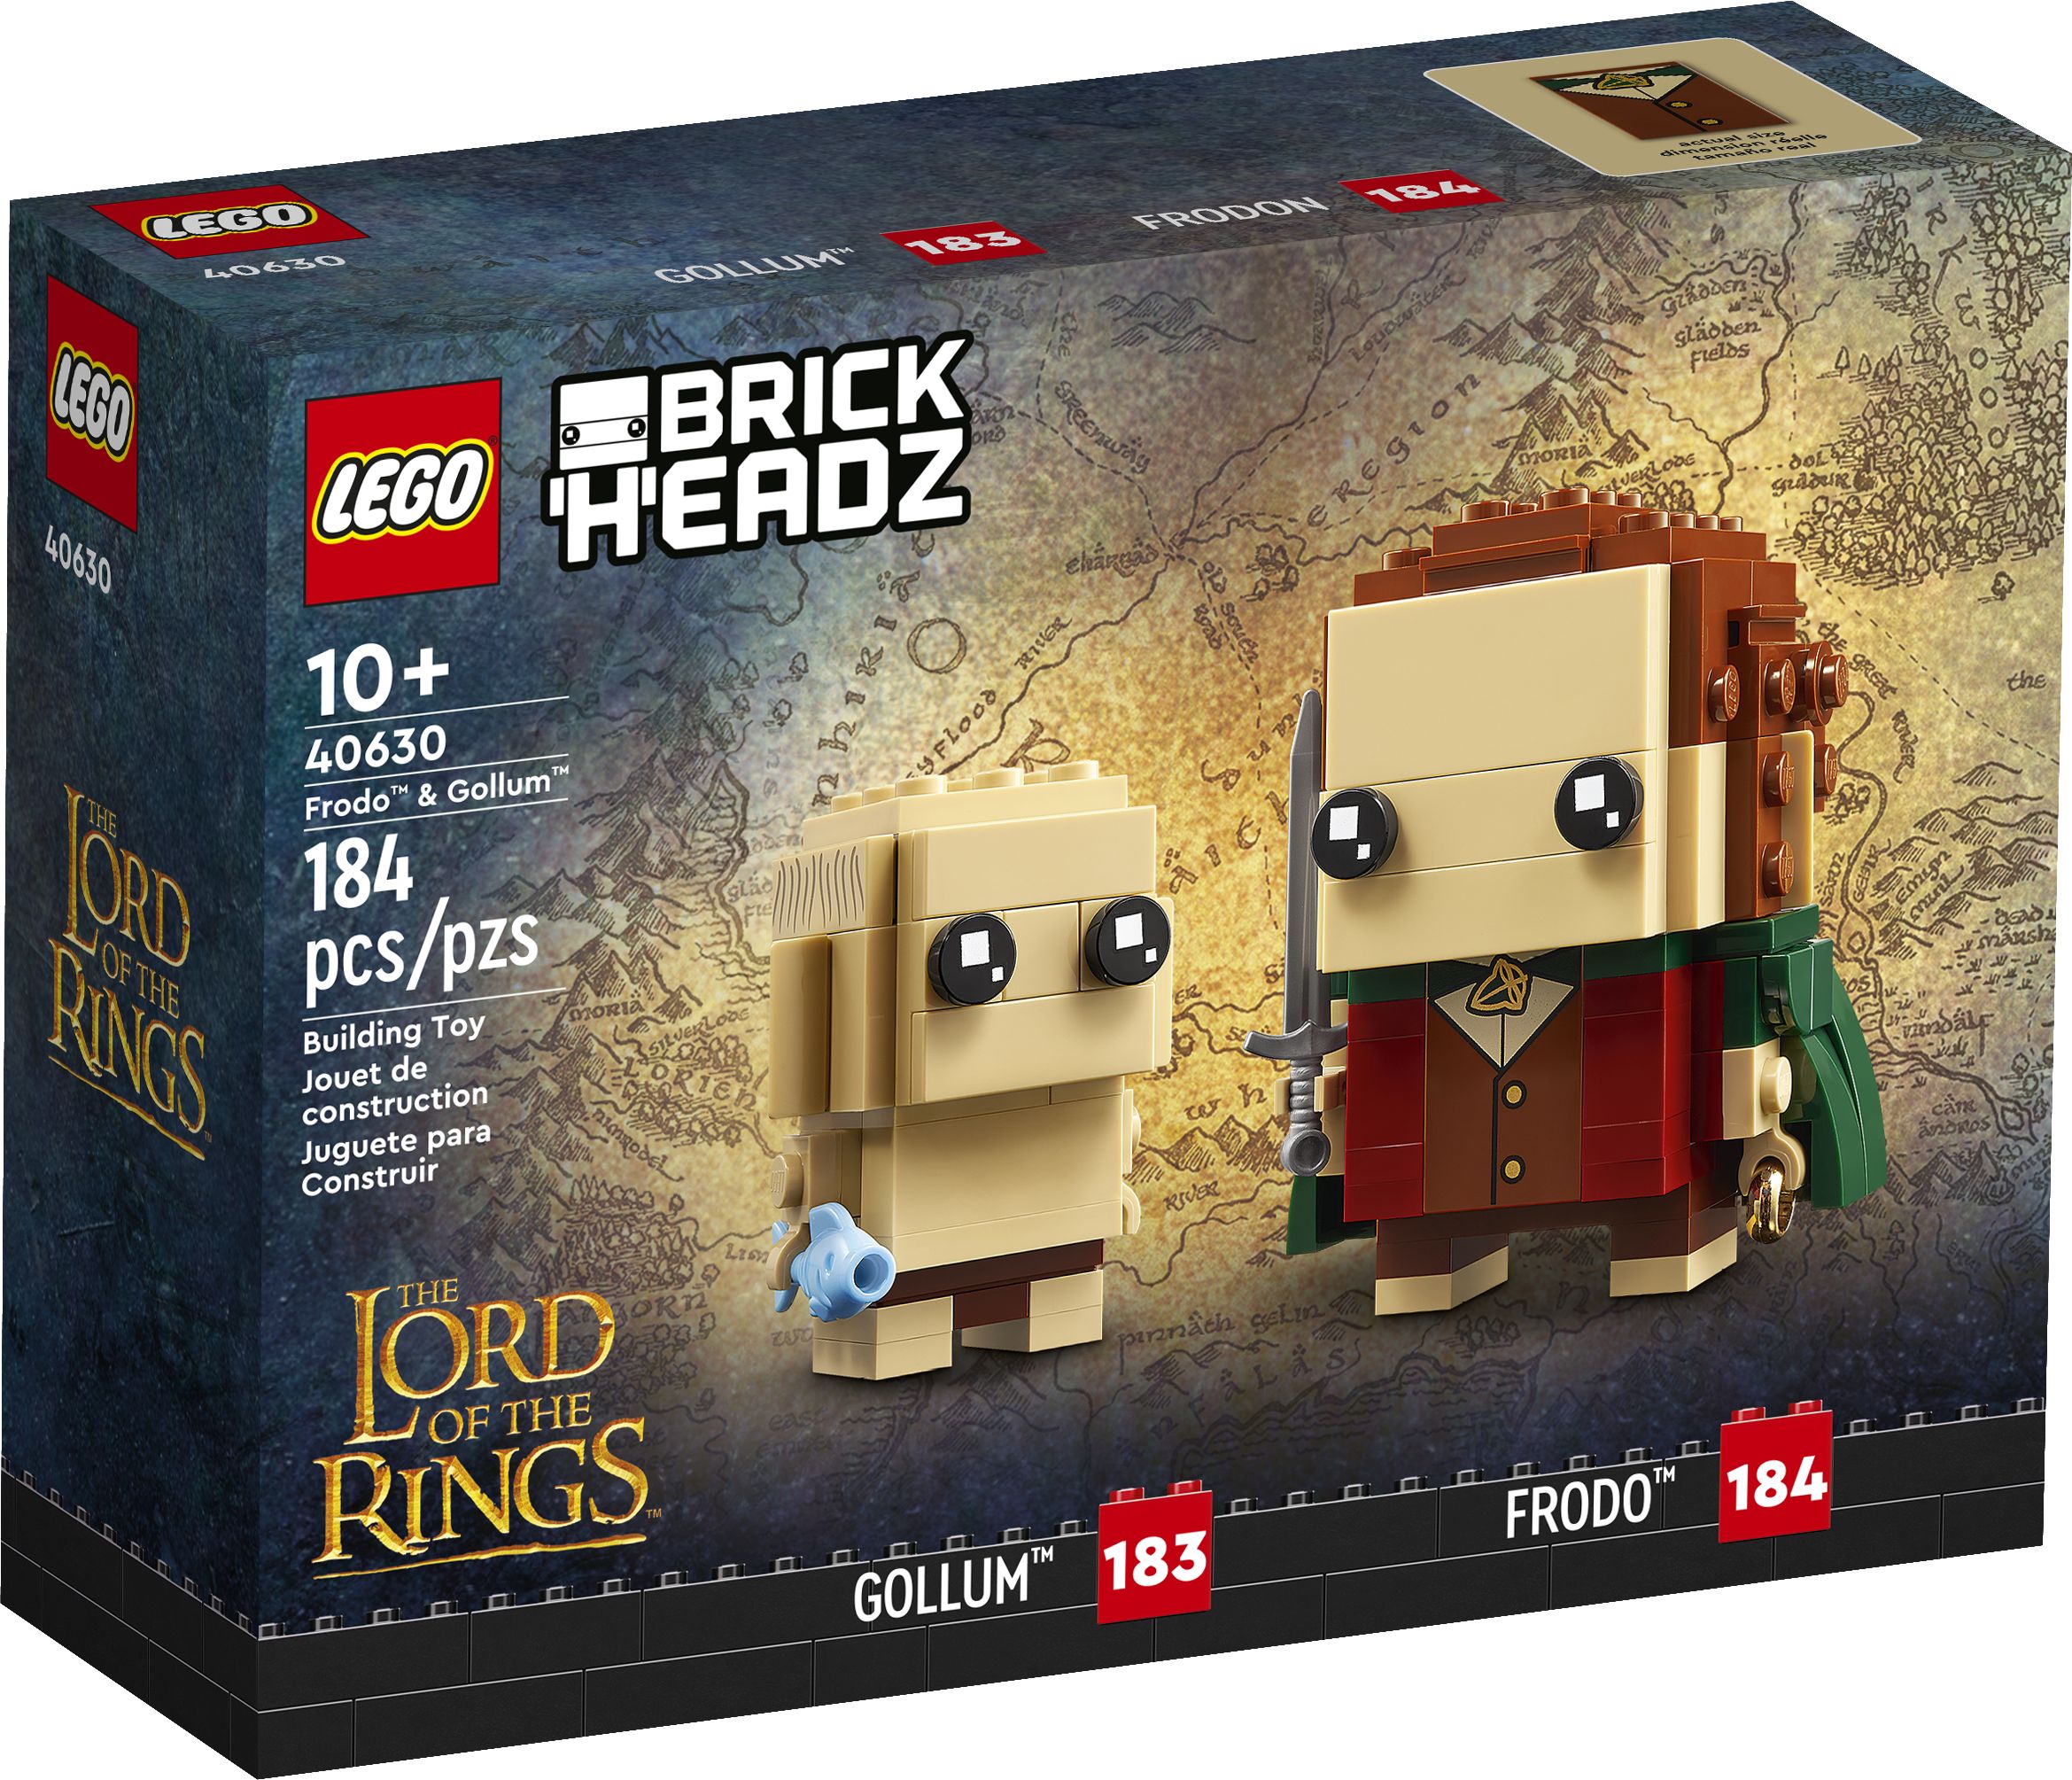 LEGO BrickHeadz 40630 Frodo™ und Gollum™ LEGO_40630_Box1_v39.jpg